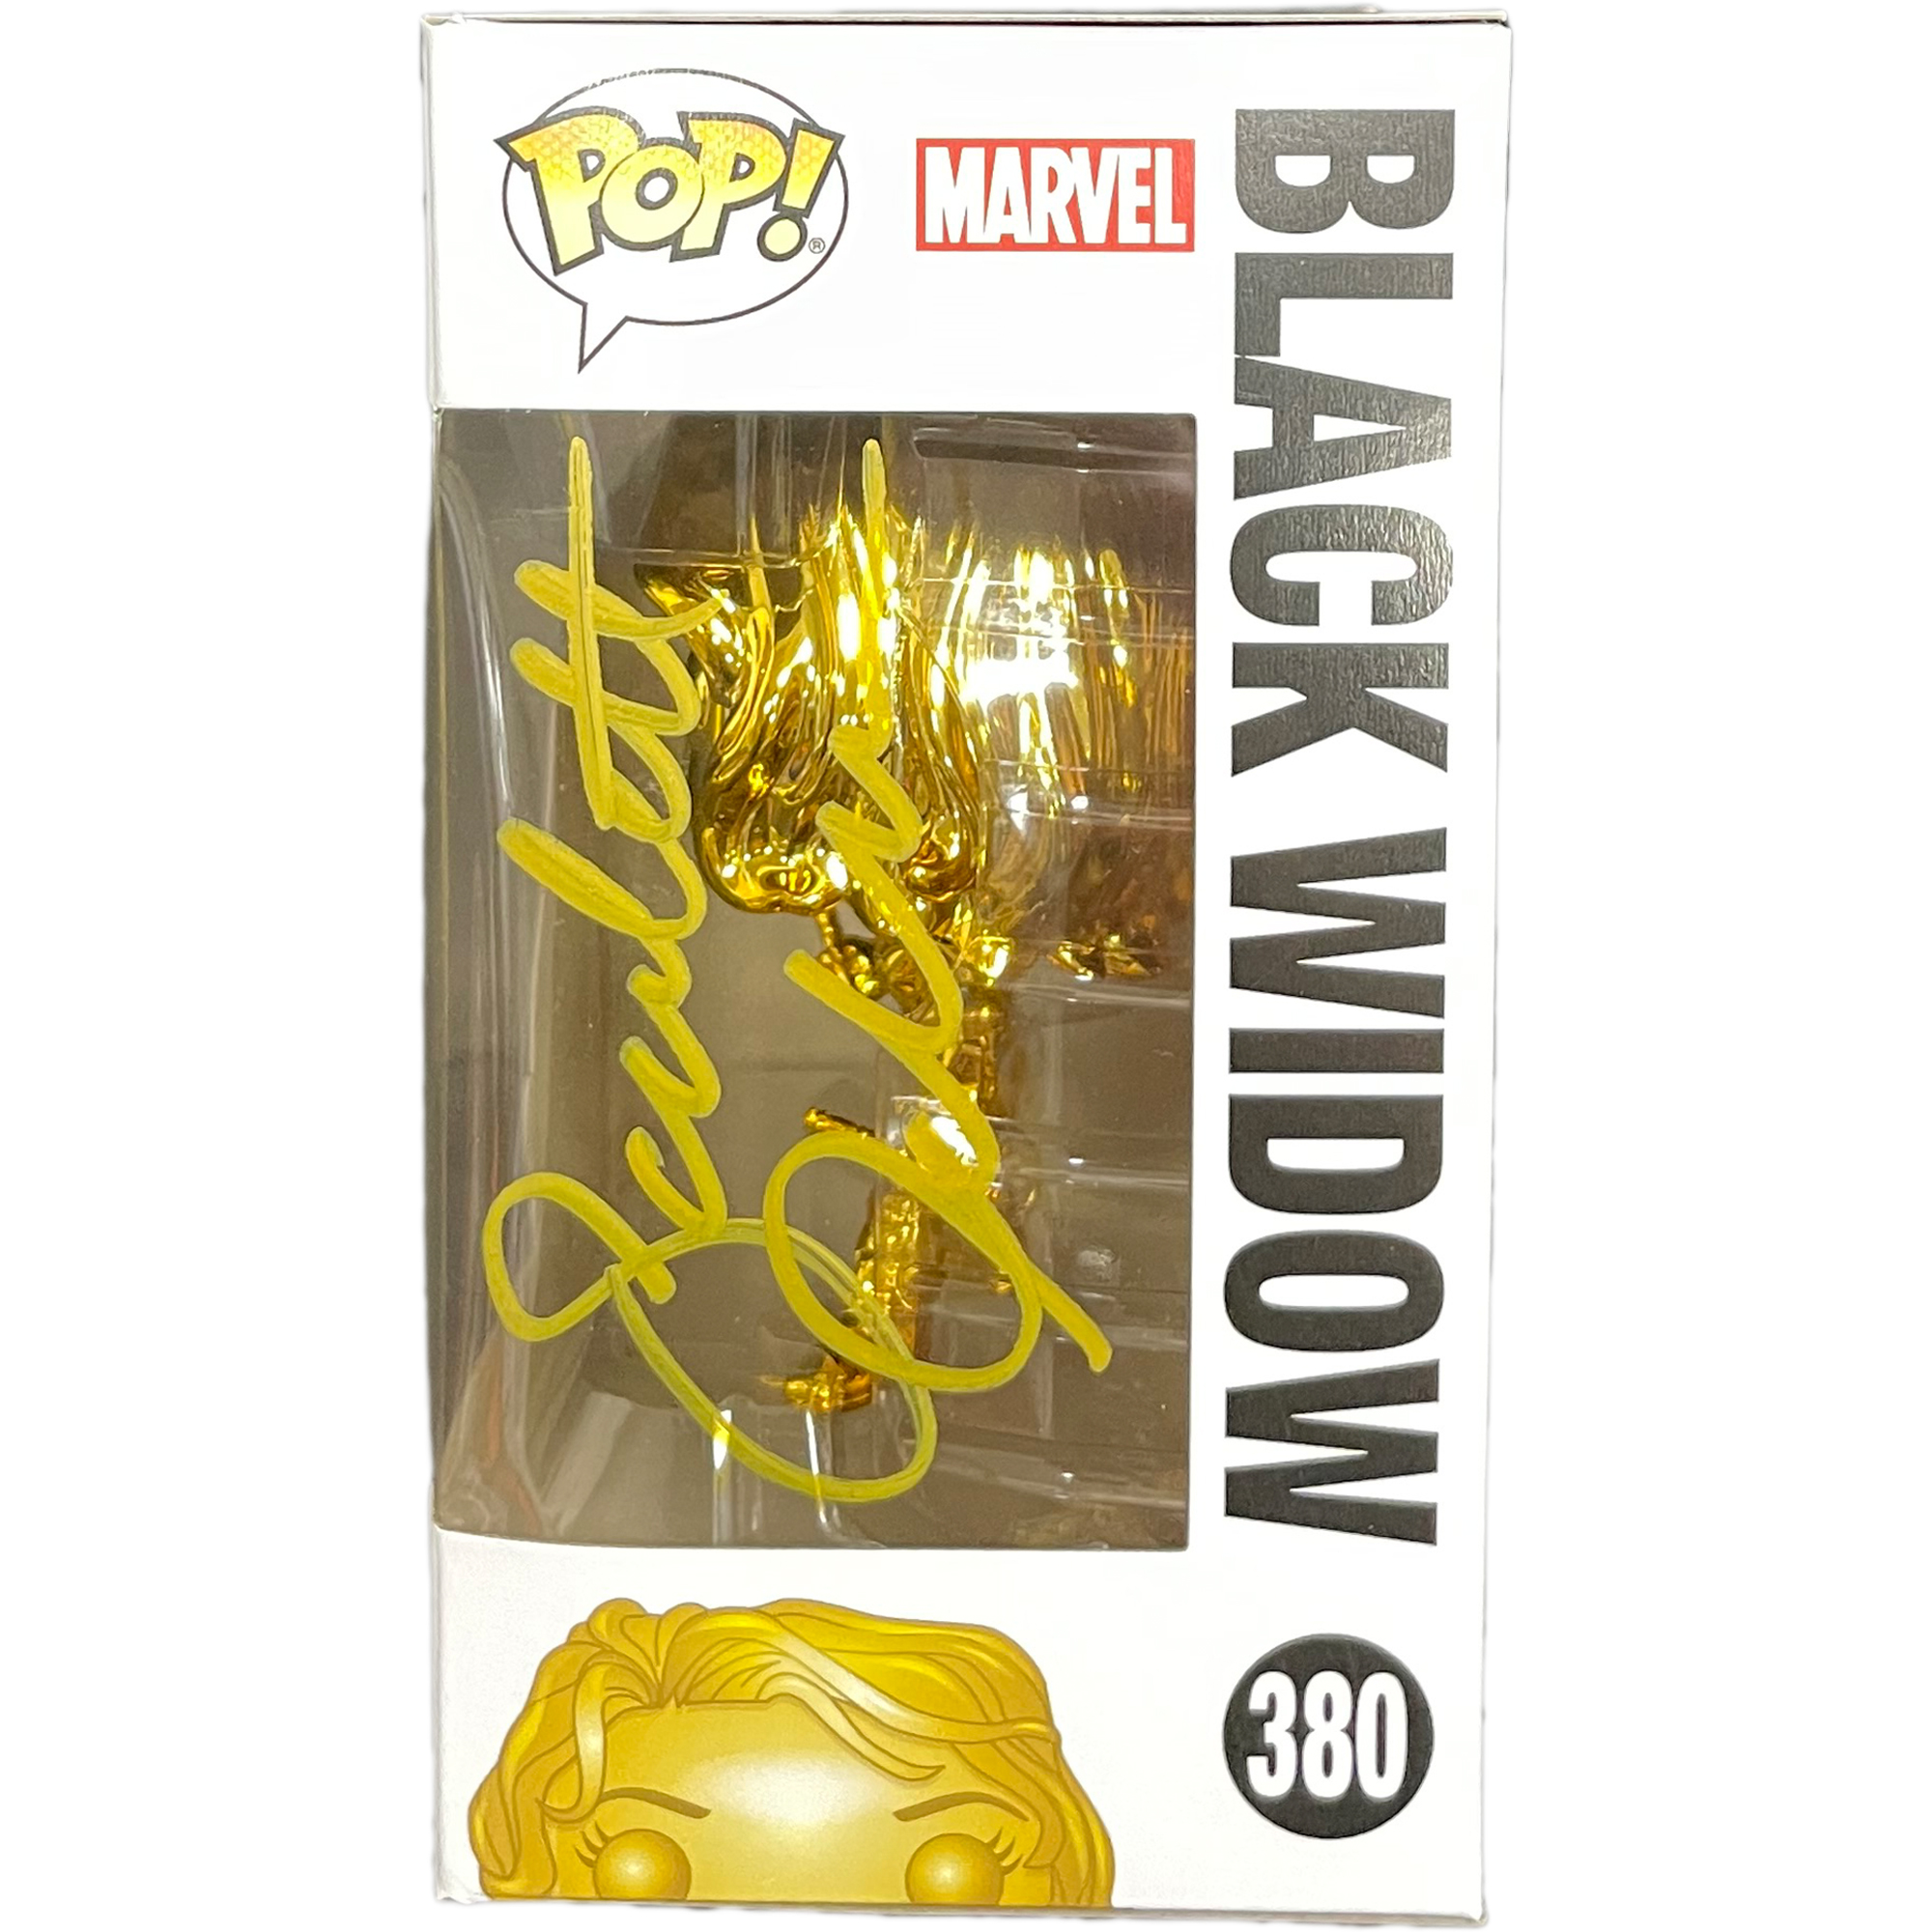 Scarlett Johansson – “Marvel Studios” Black Widow #380 Autographed Funko POP! Vinyl Figure